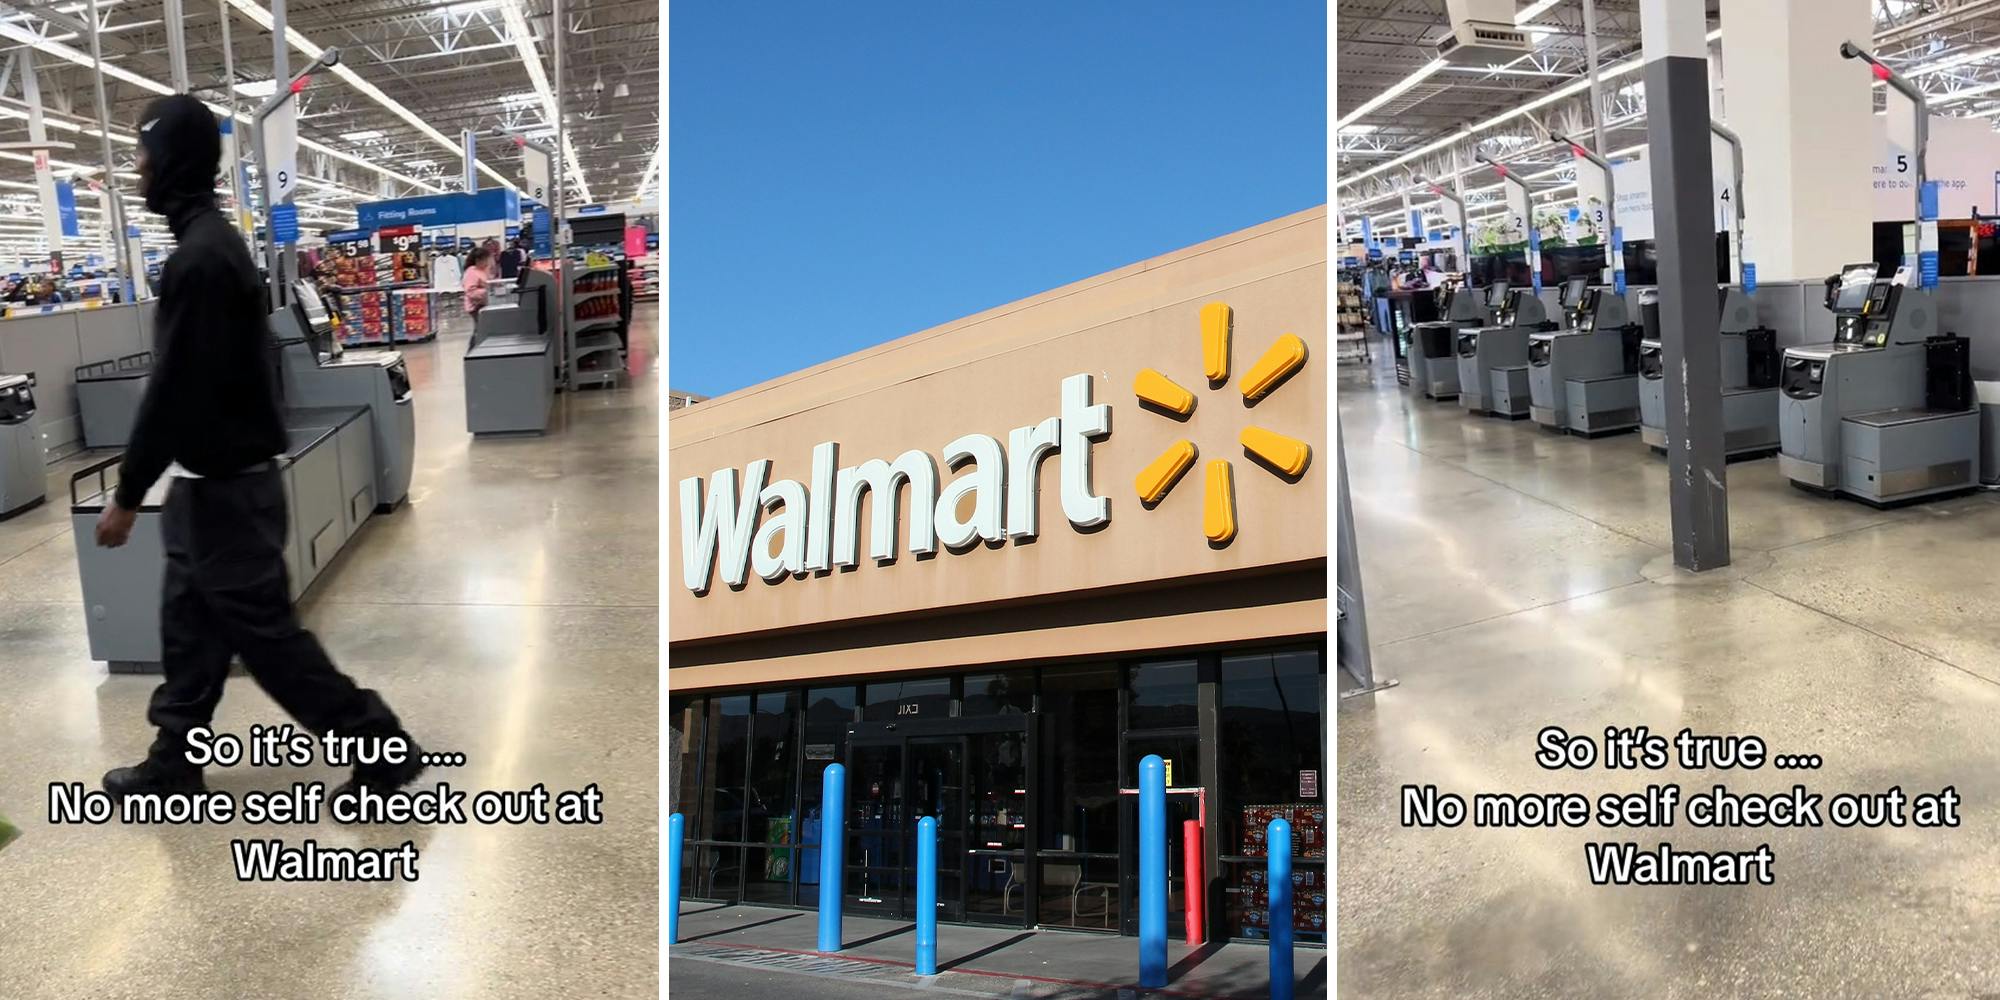 Walmart Customer Shows No More Self-Checkout as Guards Patrol